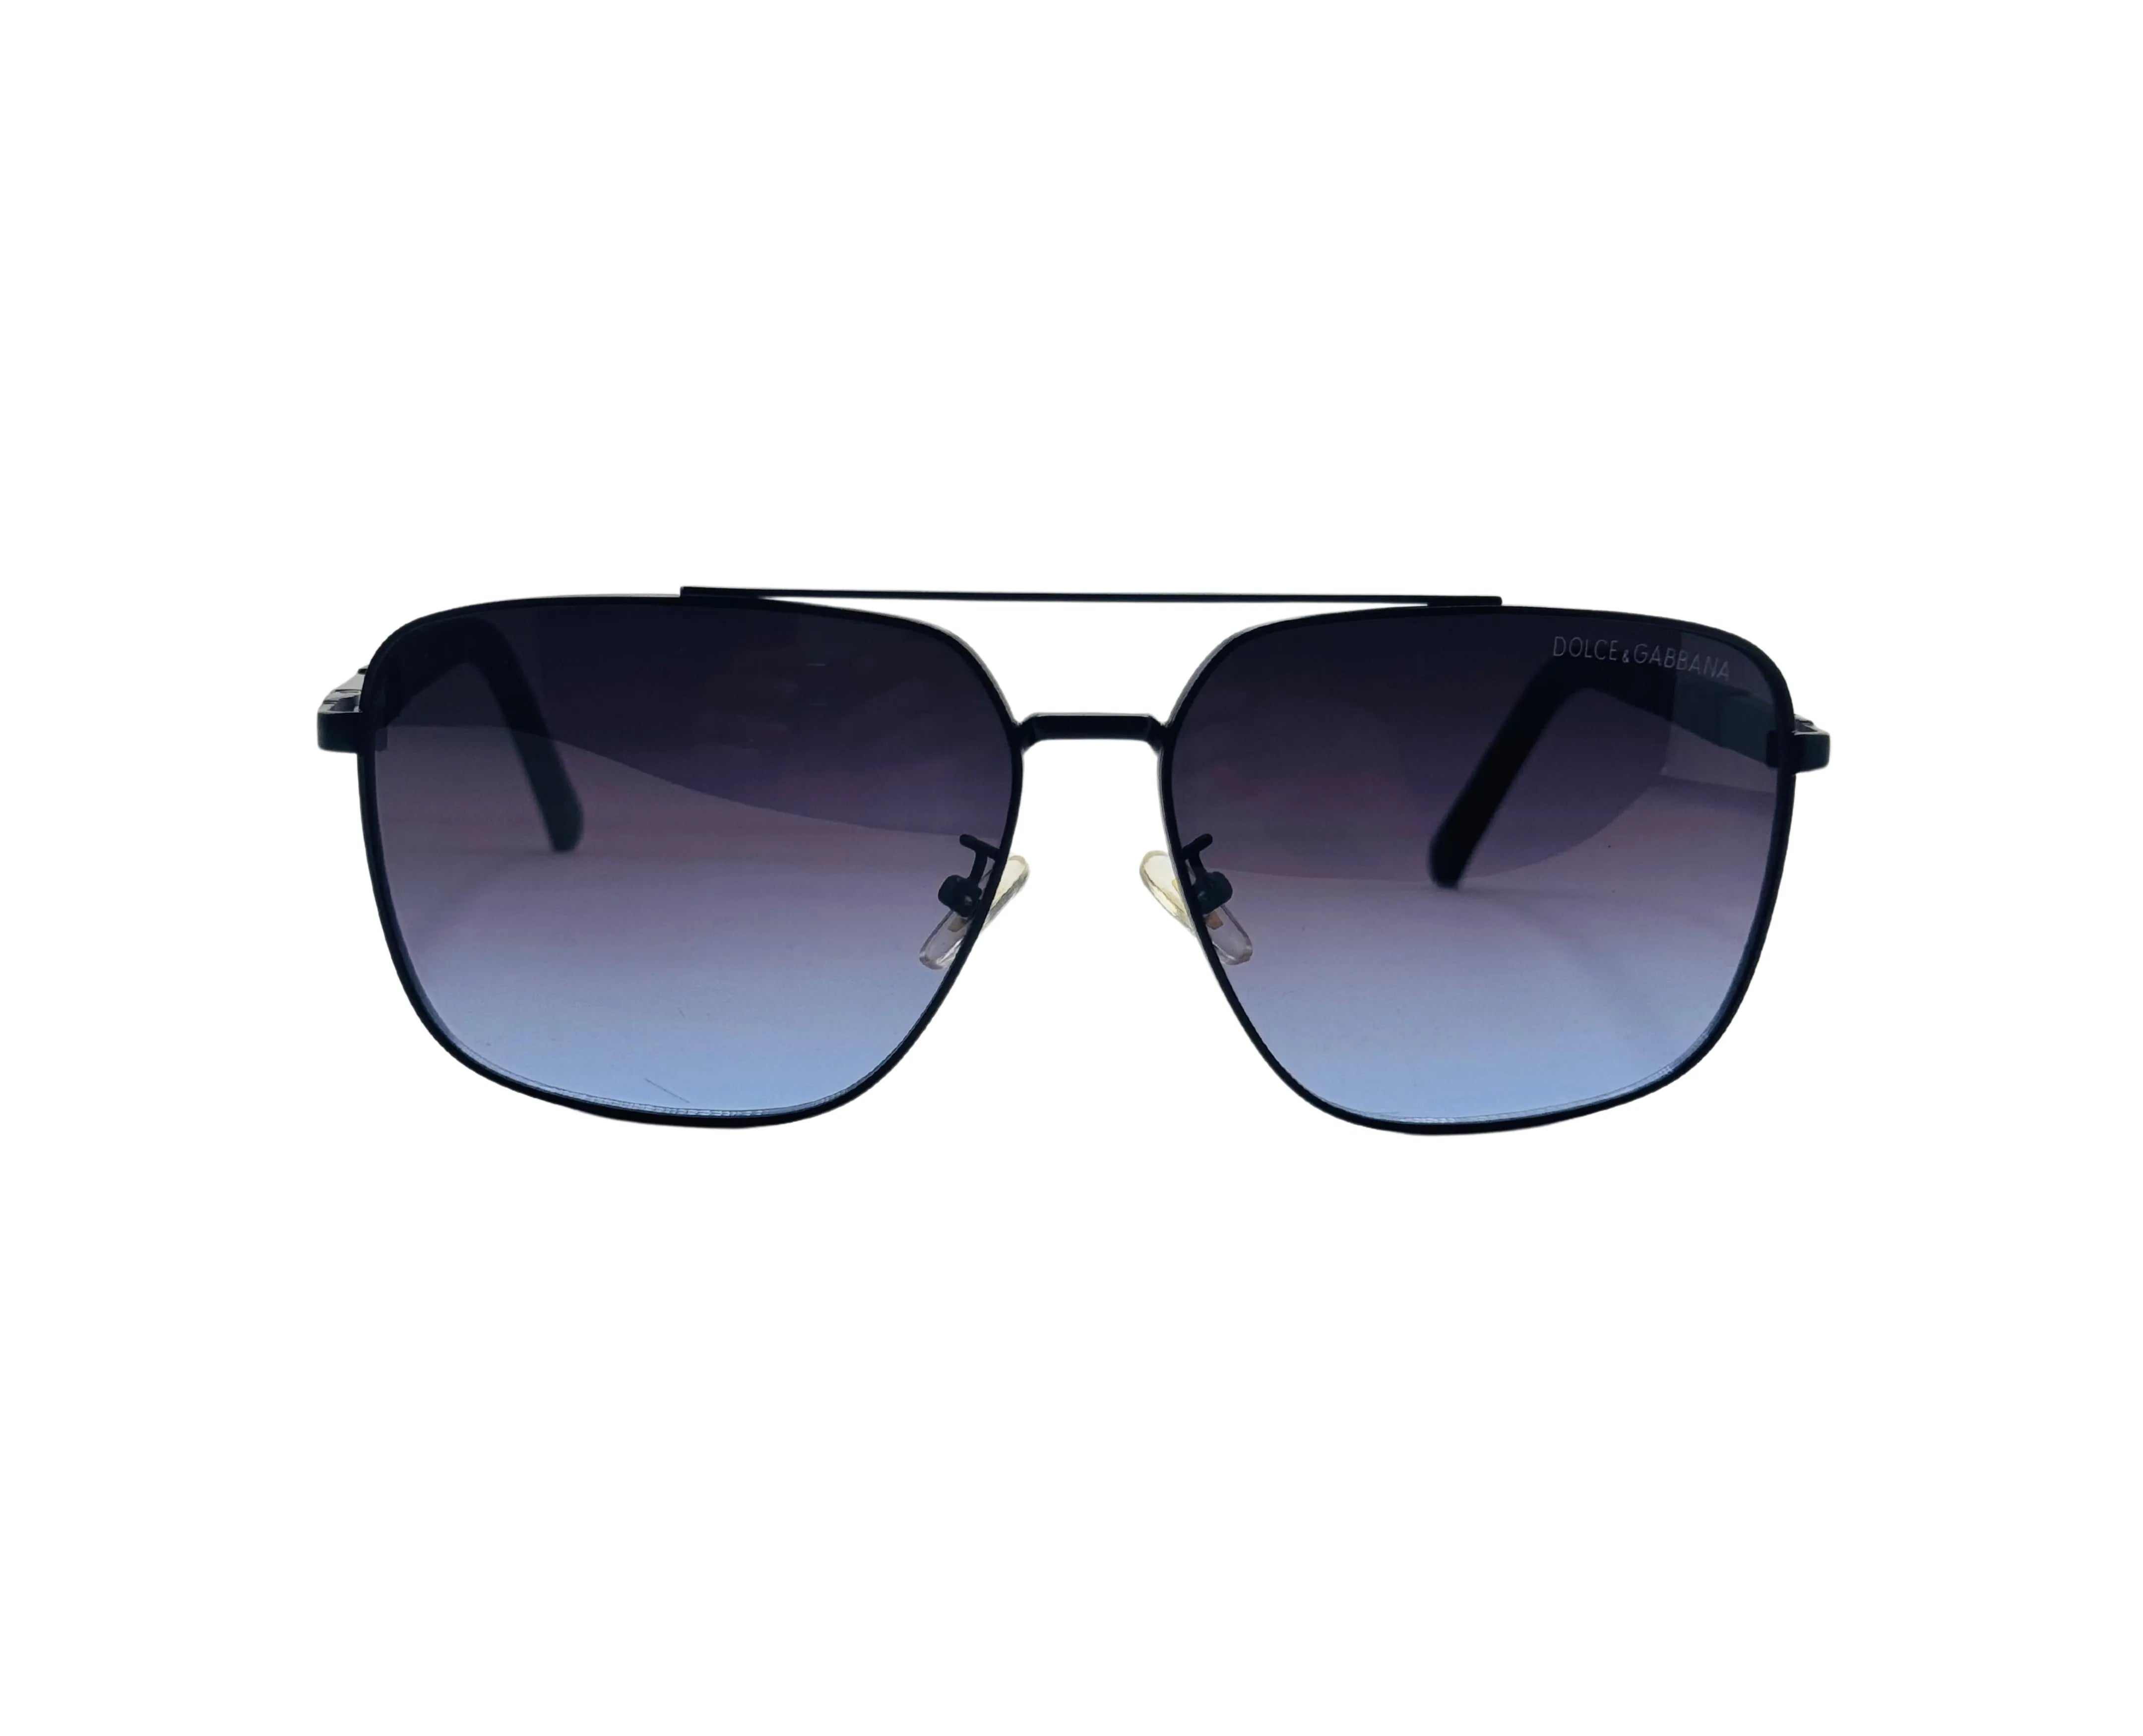 NS Deluxe - 10488 - Black - Sunglasses